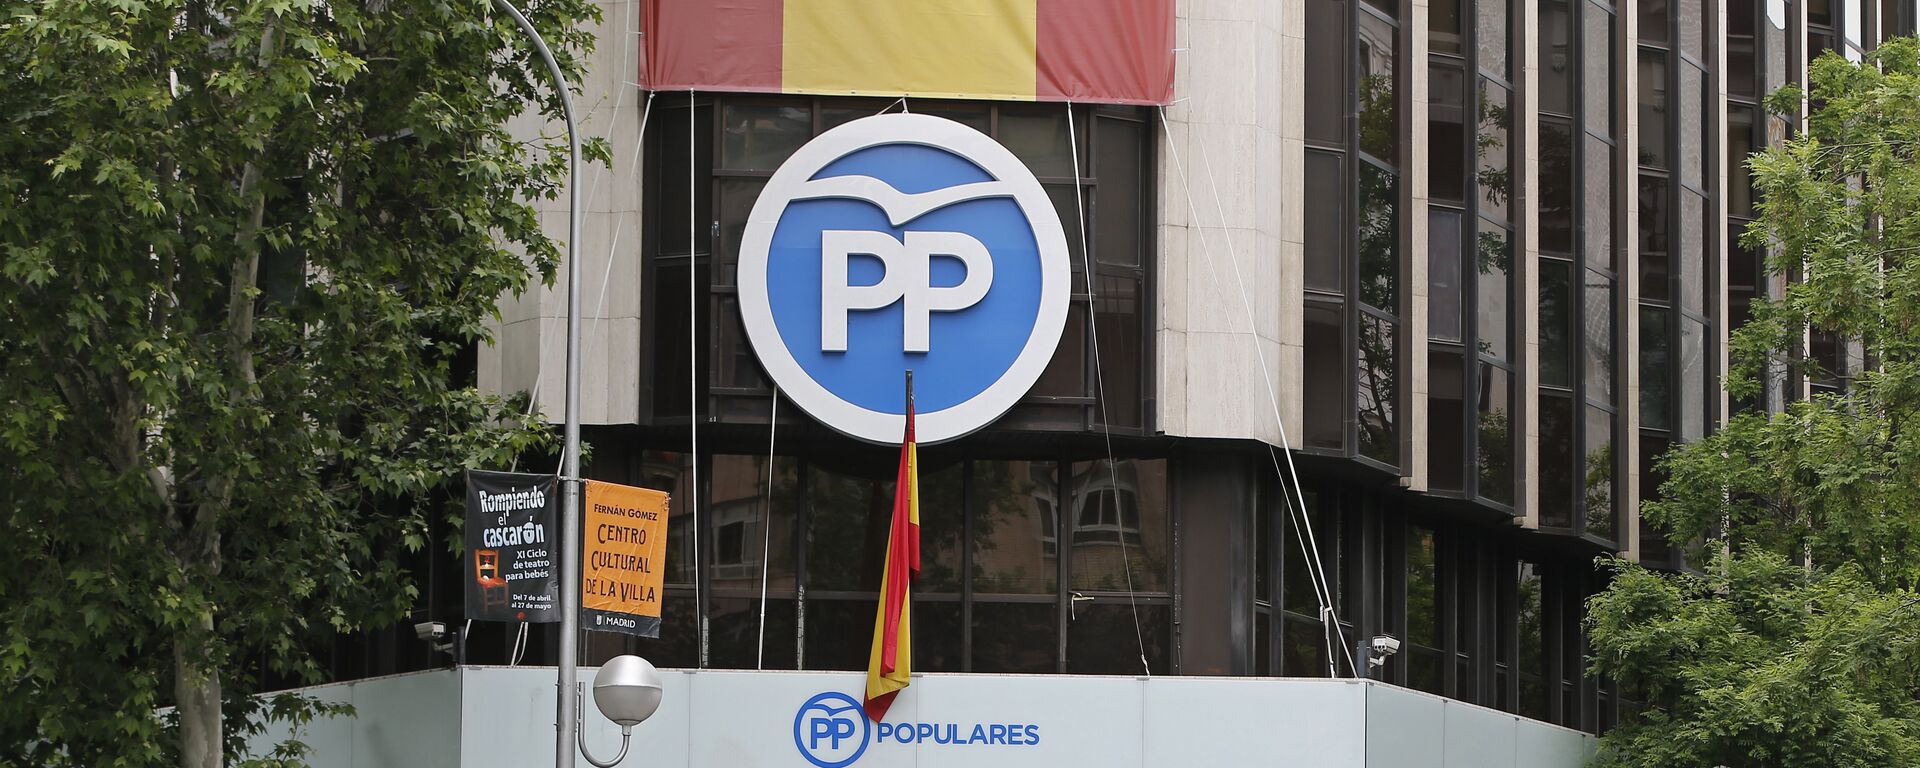 Logo del Partido Popular (PP) - Sputnik Mundo, 1920, 08.02.2021